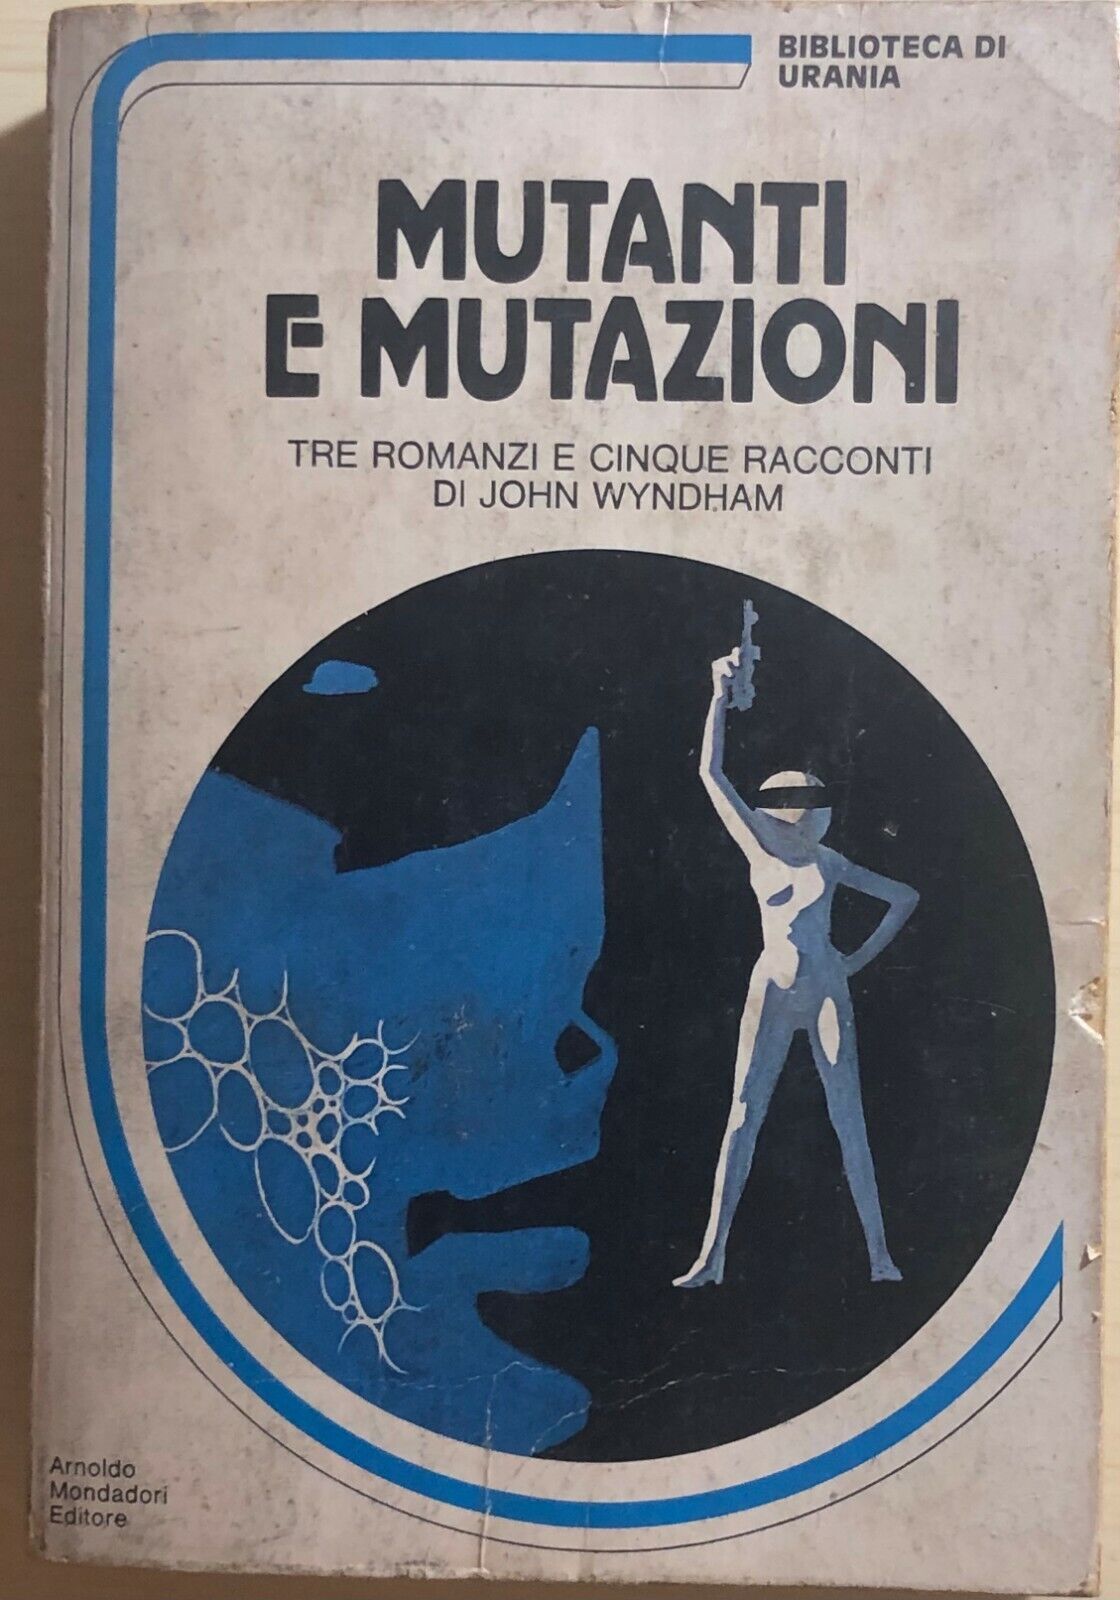 Mutanti e mutazioni  di John Wyndham, 1970, Arnoldo Mondadori Editore